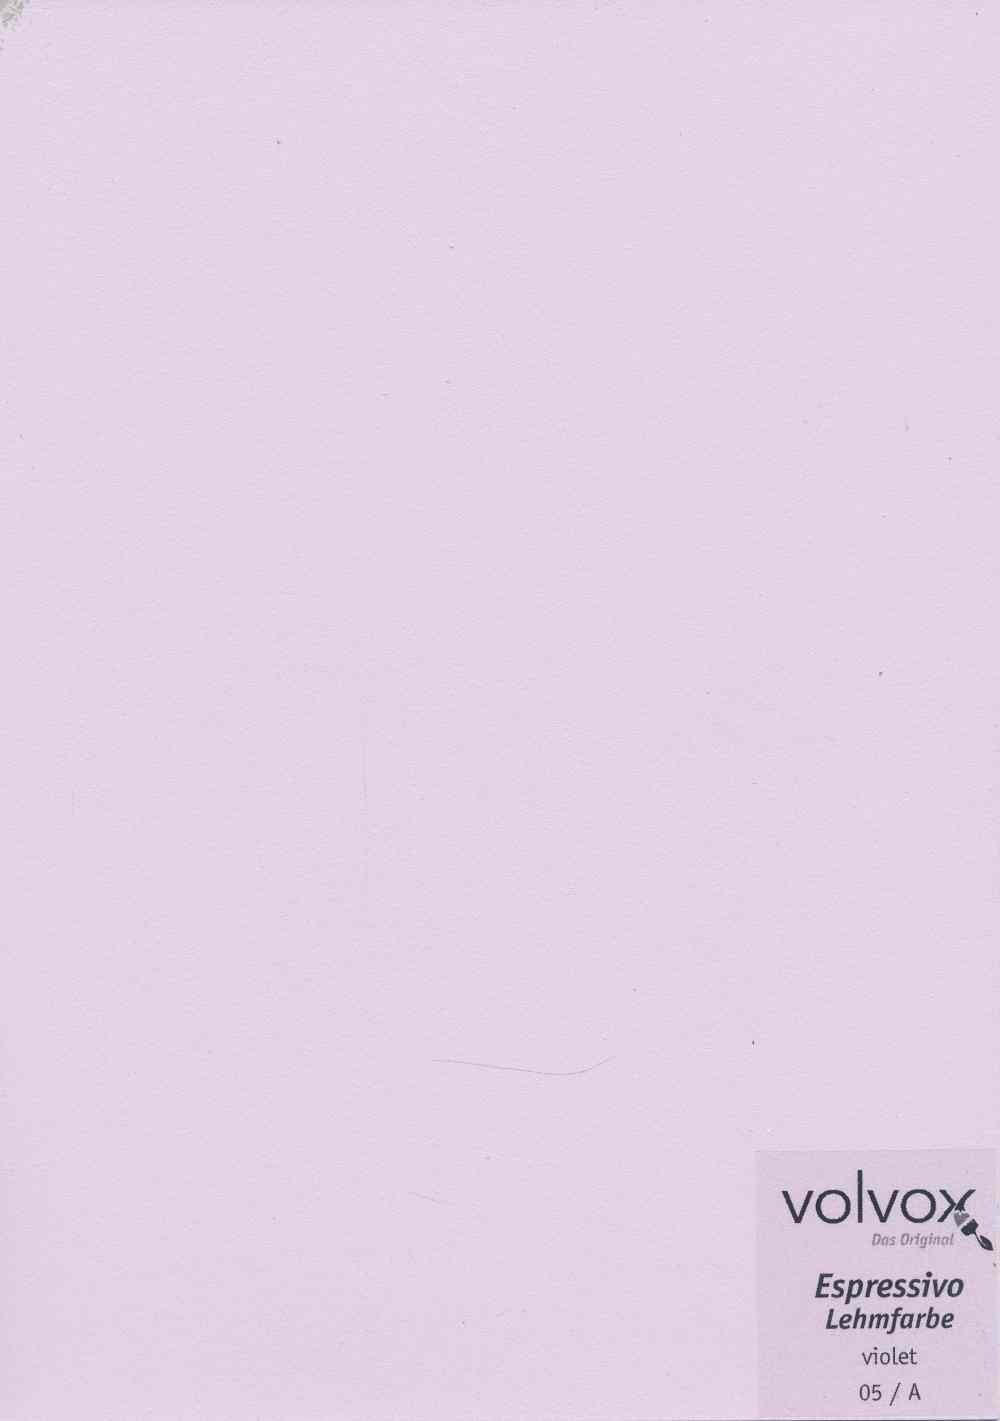 Volvox Espressivo Lehmfarbe 005 violet